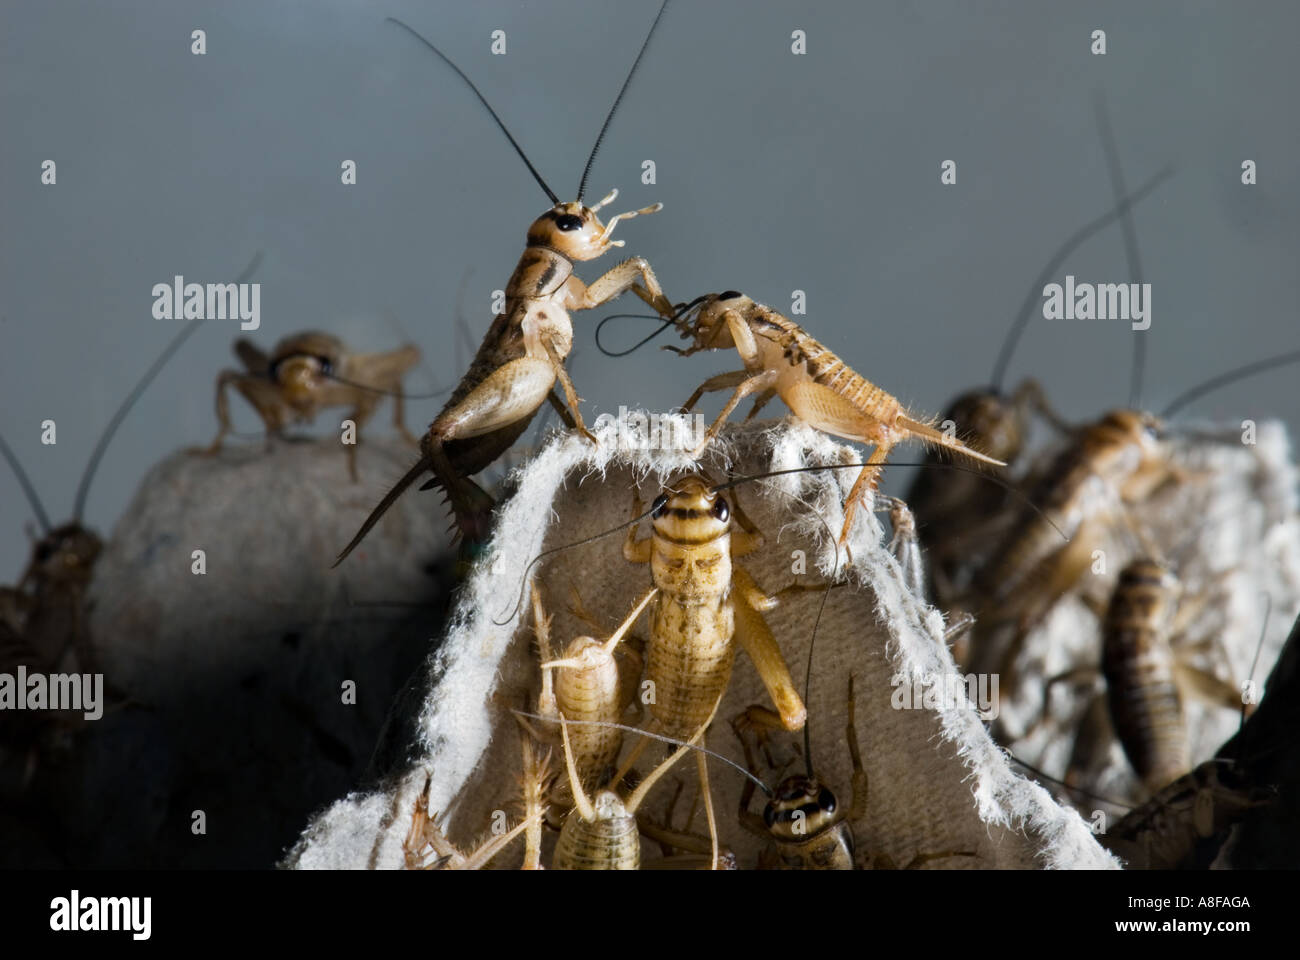 house cricket crickets Gryllidae Gryllinae Gryllus Heimchen Acheta domesticus grille hopper housecricket Stock Photo